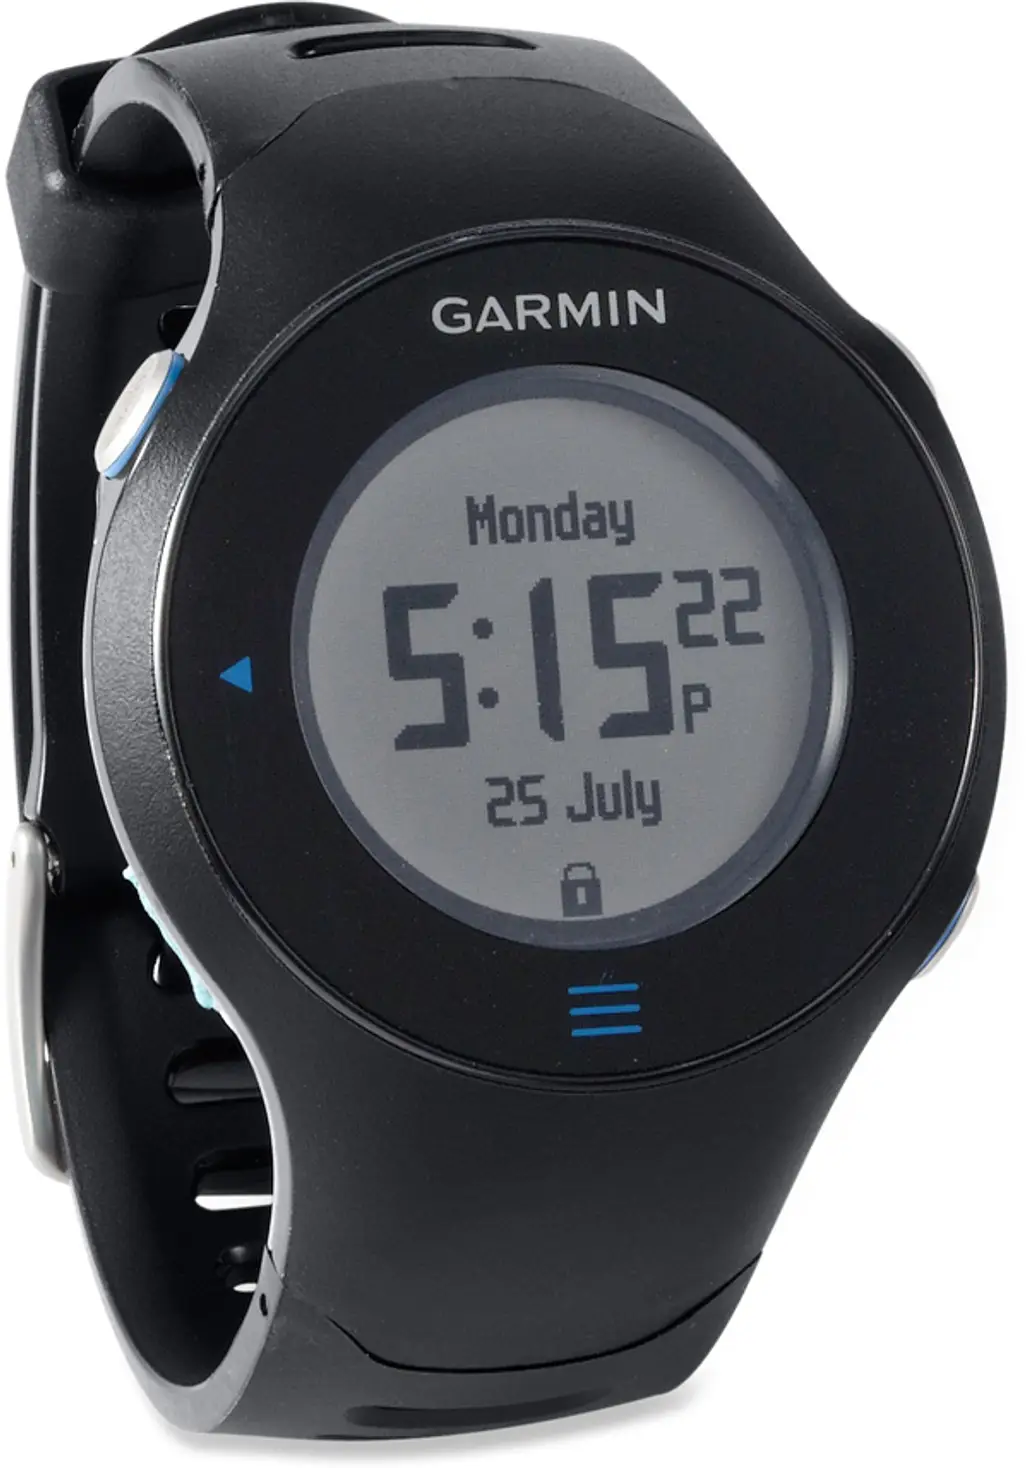 Garmin Forerunner 610 GPS Heart Rate Monitor